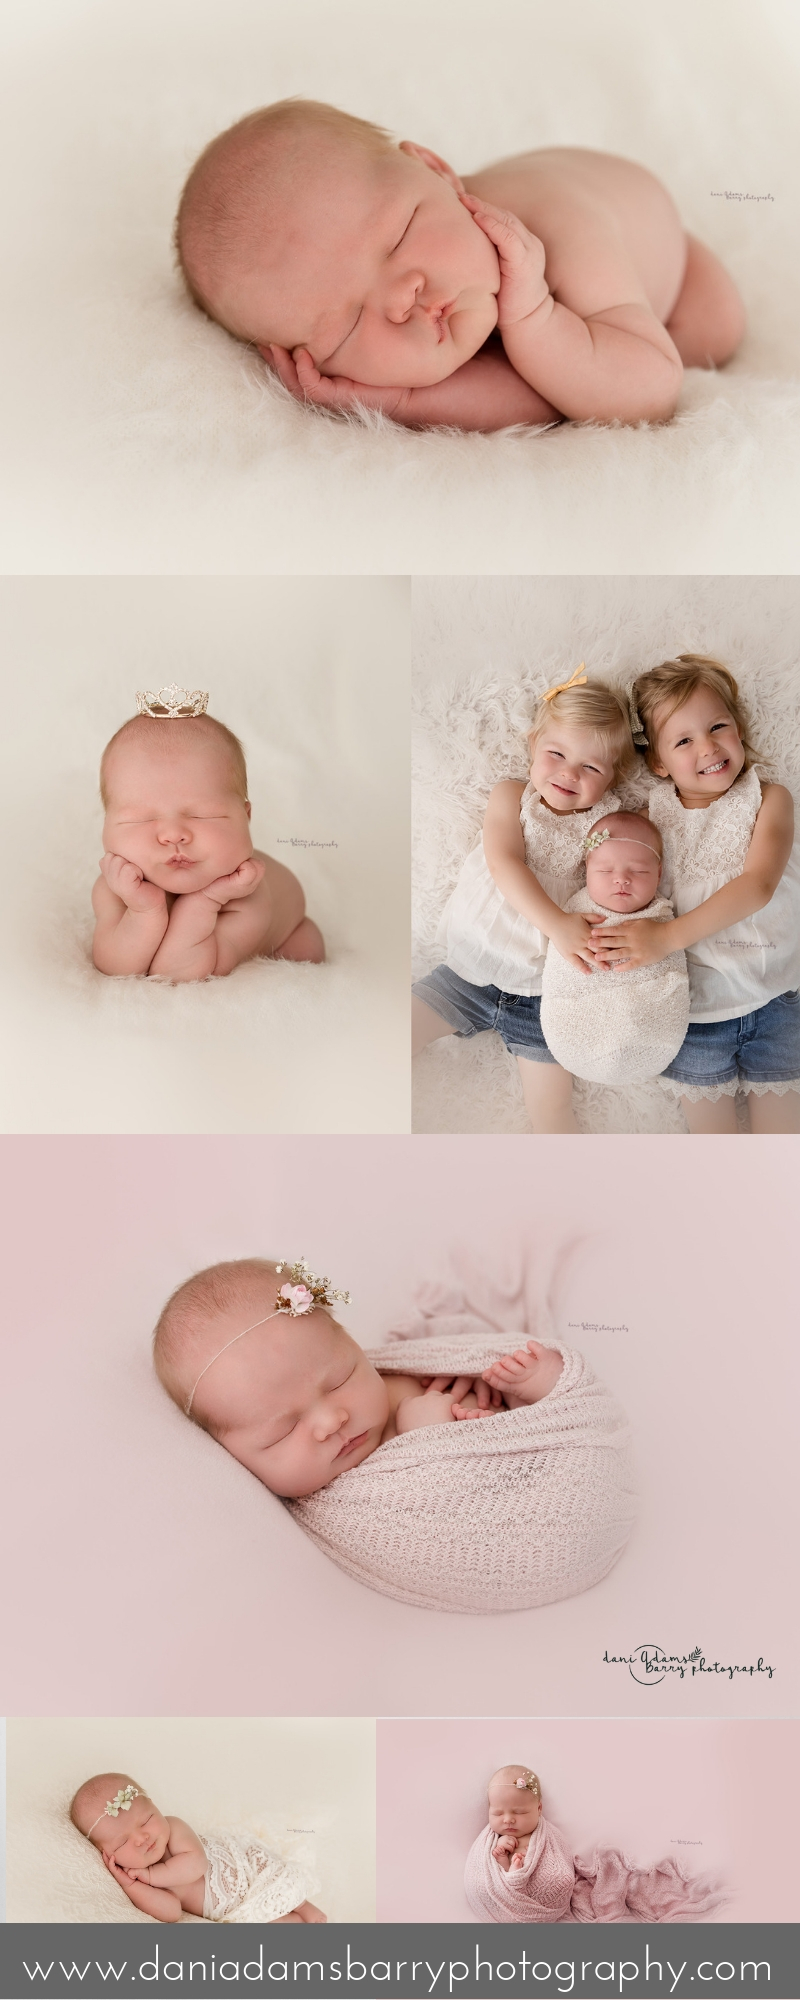 Blush Pink Newborn Photography Dallas TX- Baby Girl Newborn Photos - Dani Adams Barry Photography